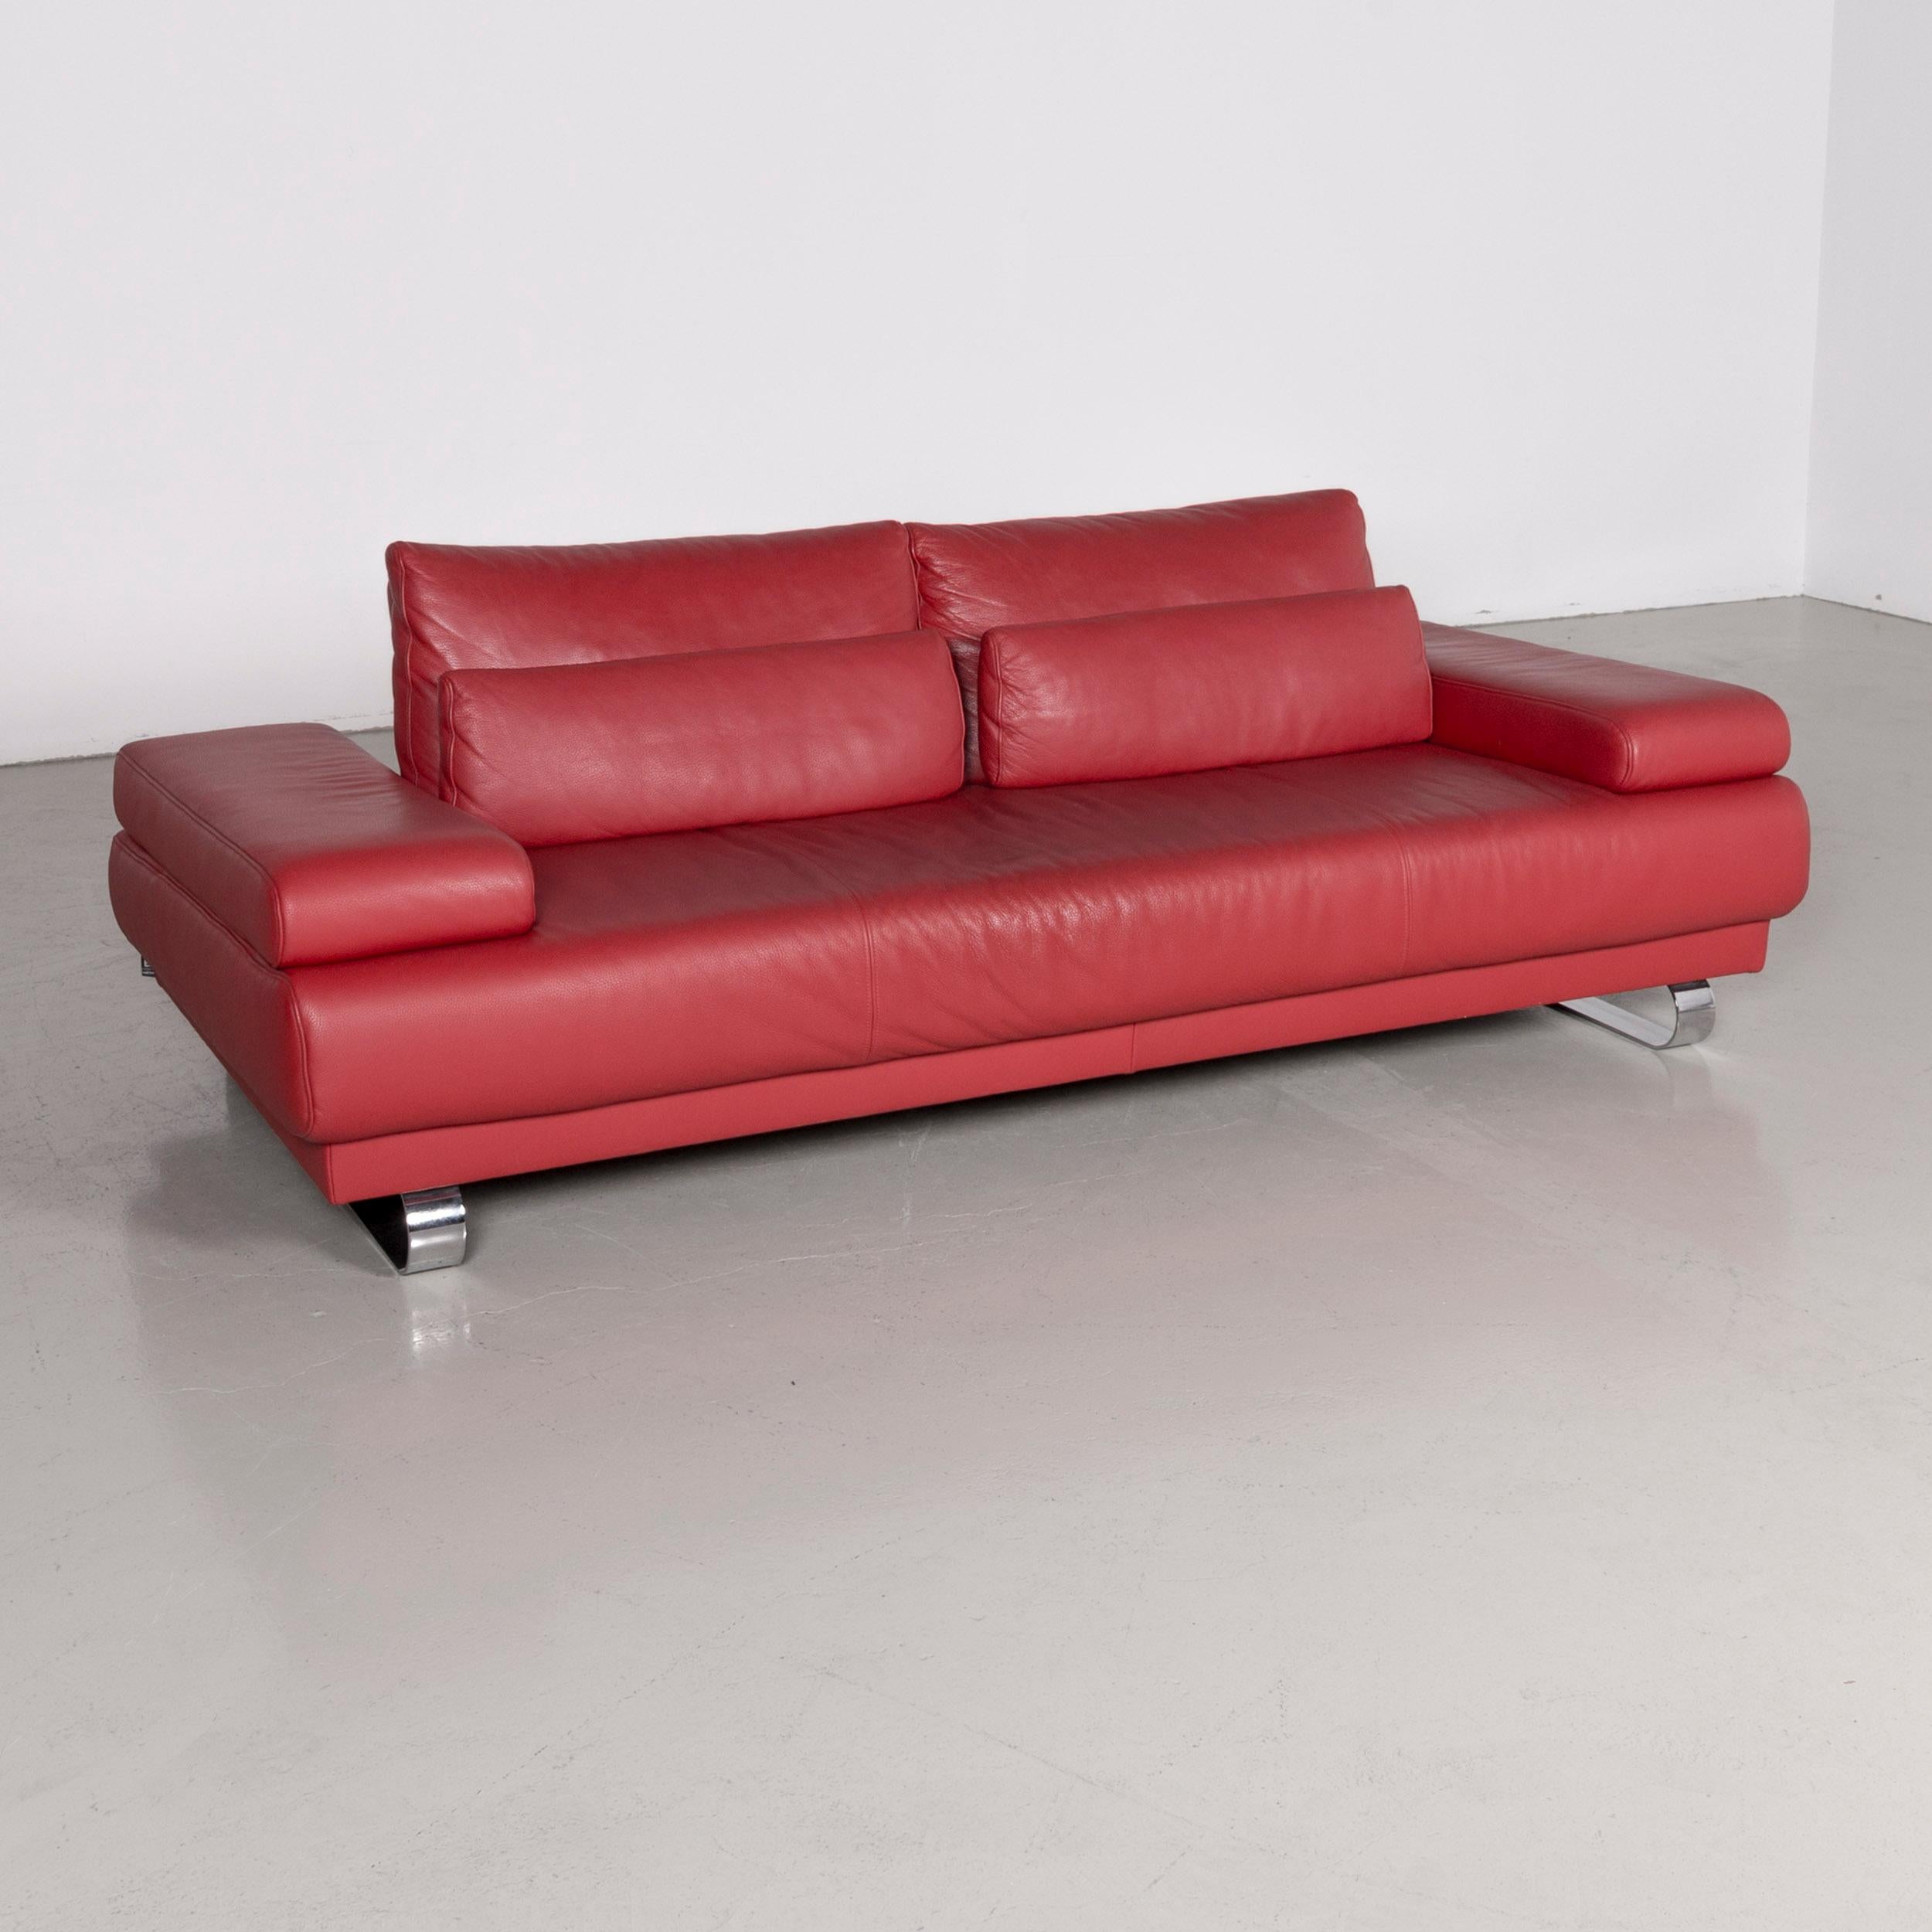 Ewald Schillig Harry designer sofa leather red three-seat couch.